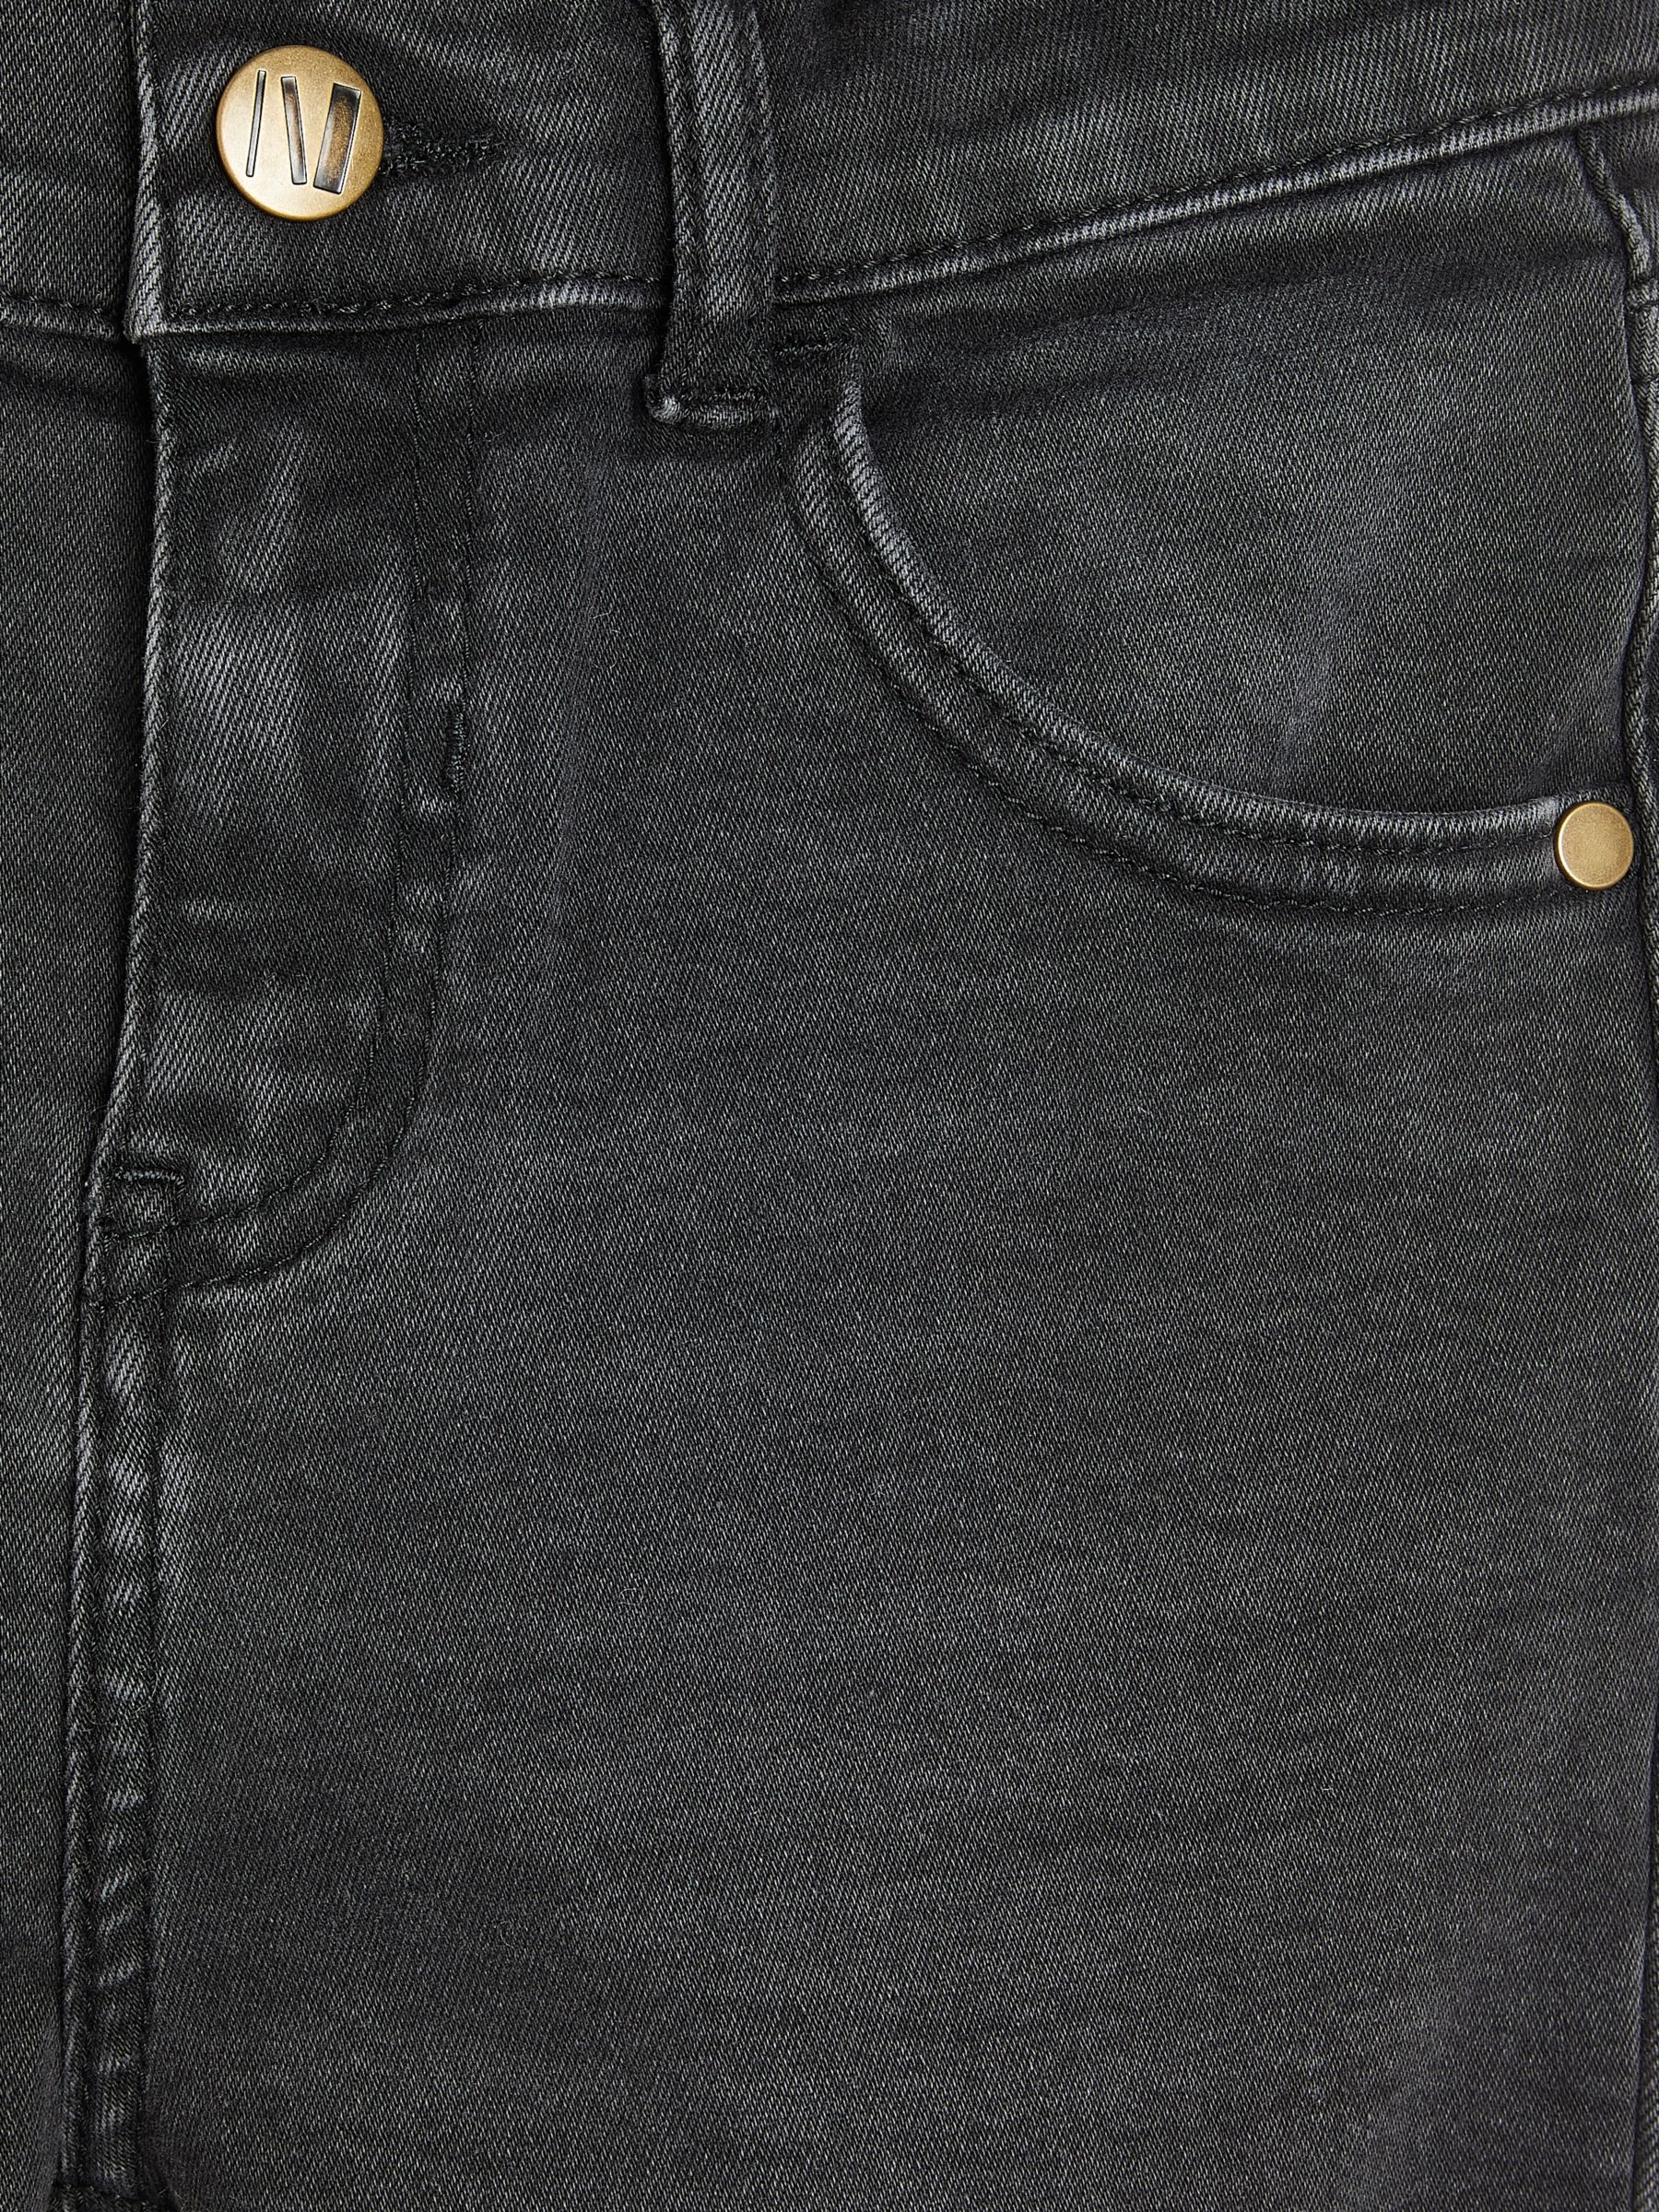 John Lewis Boys' Skinny Denim Jeans, Black at John Lewis & Partners